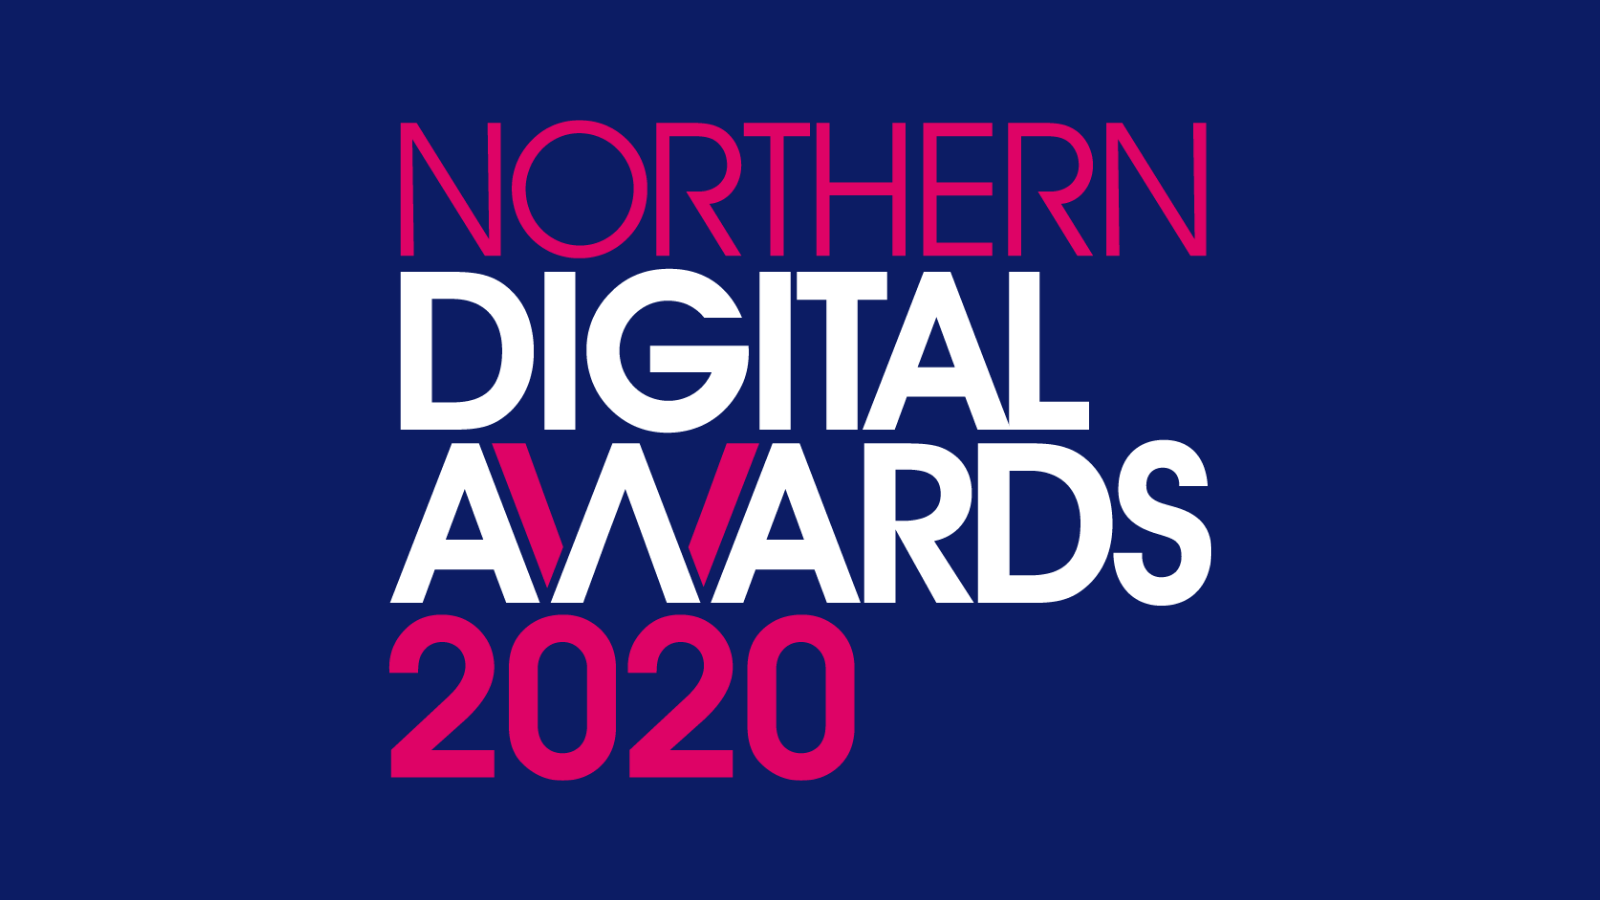 Northern Digital Awards 2020